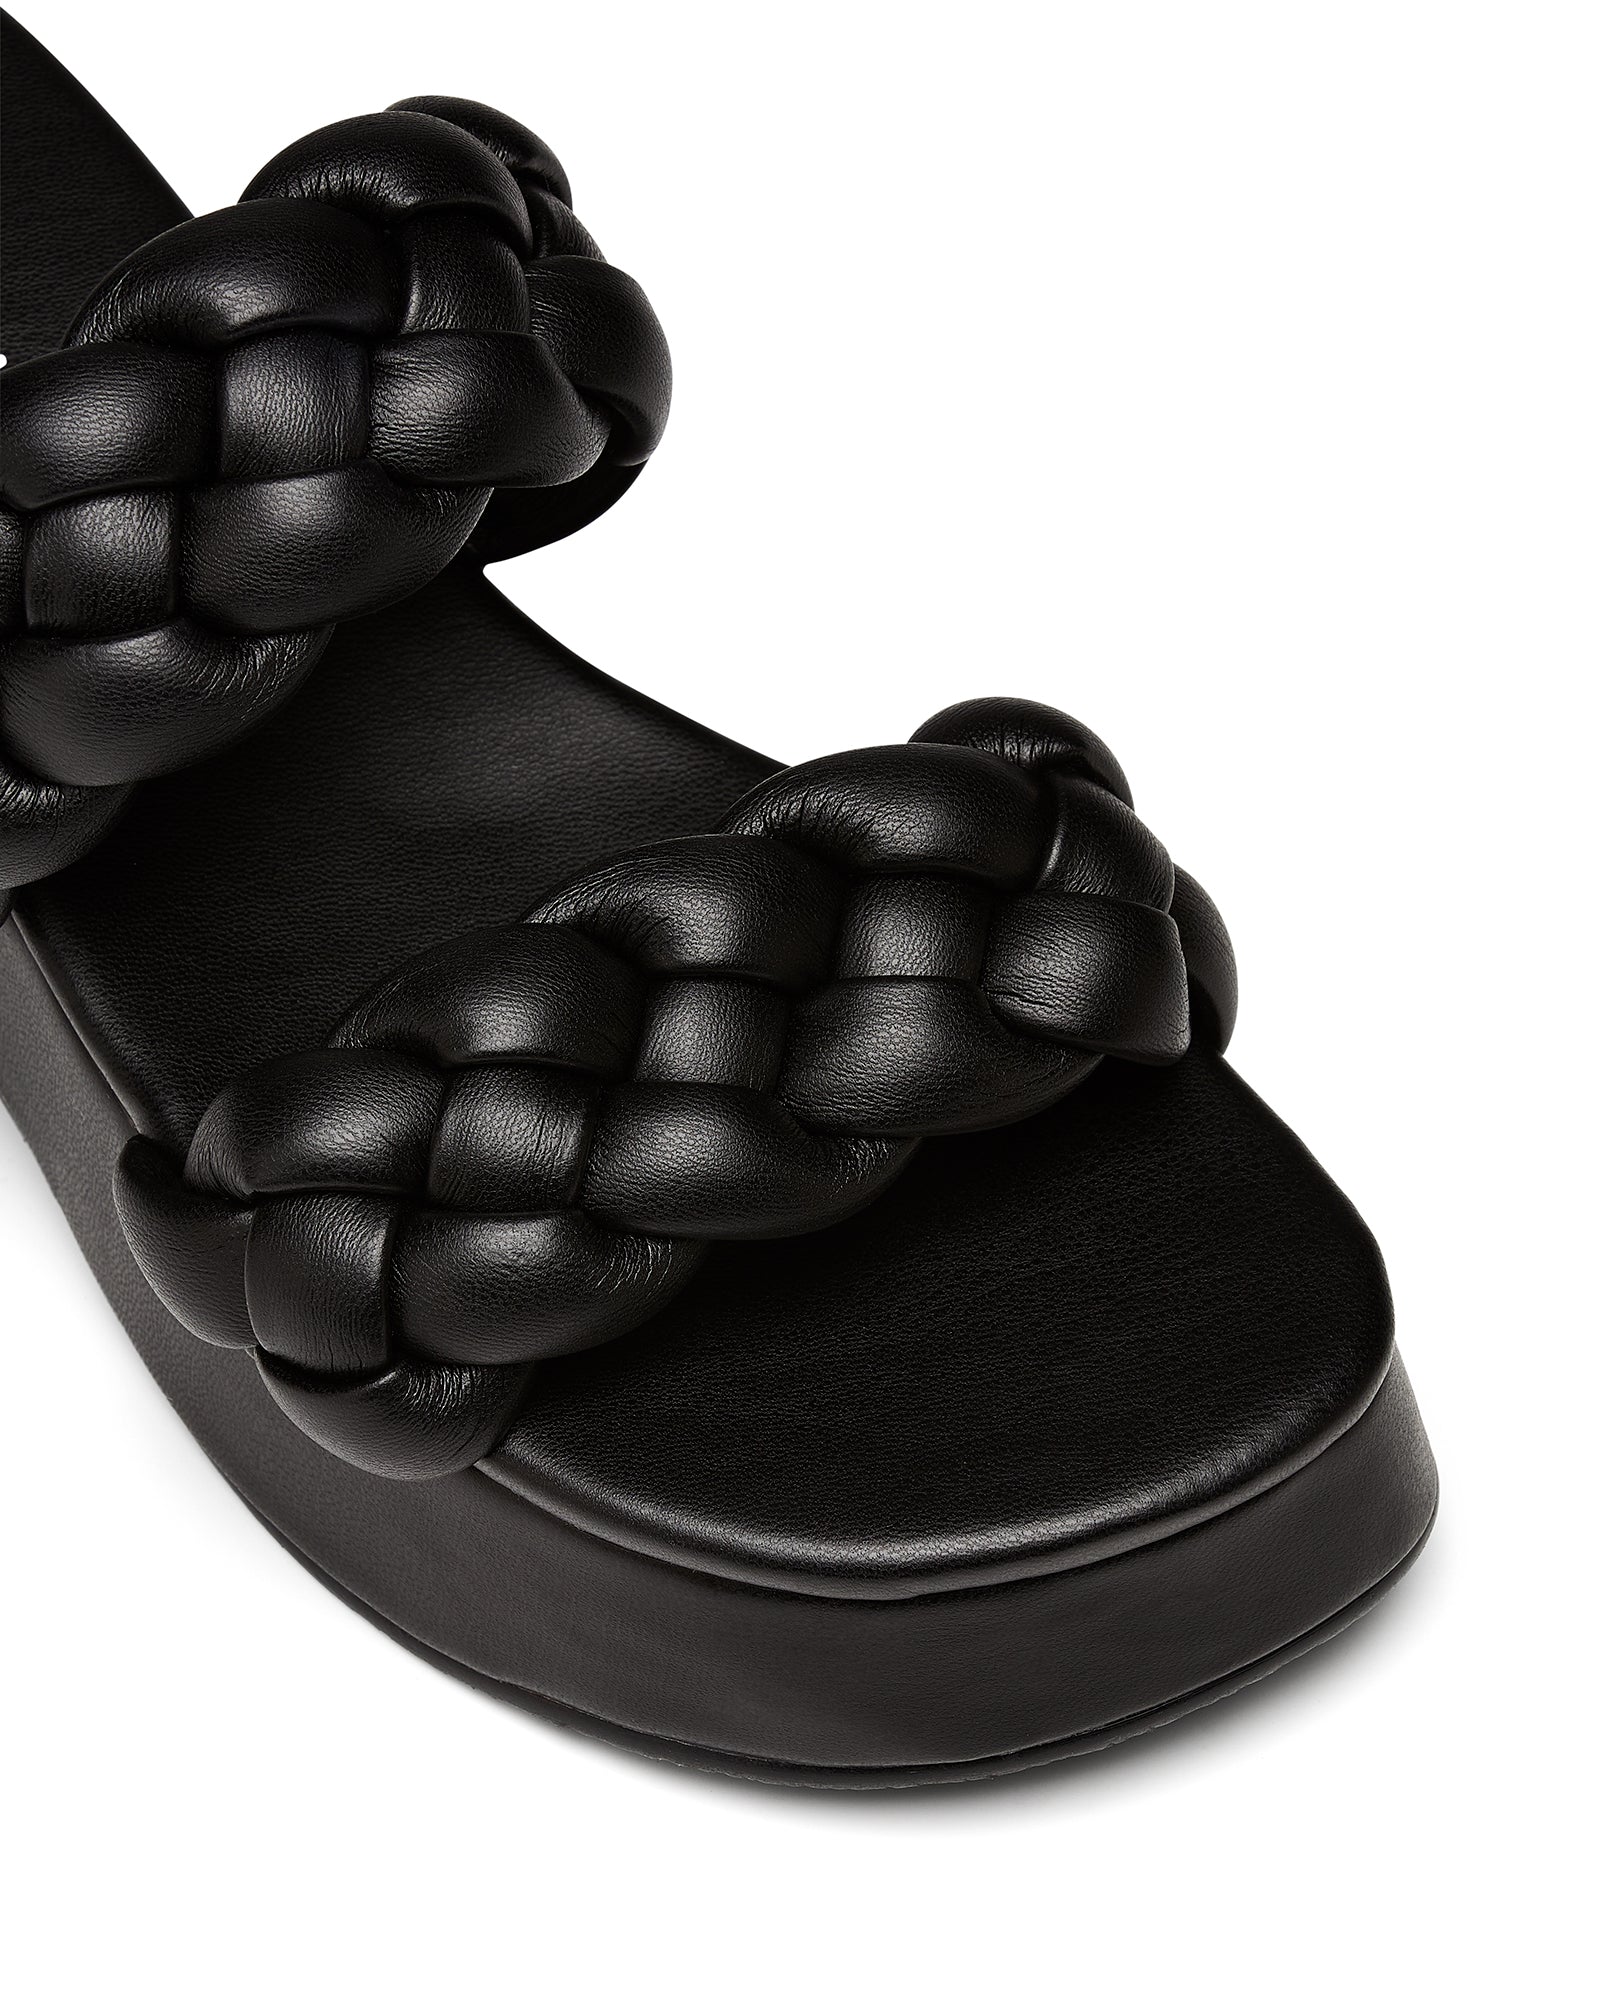 Therapy Shoes Christy Black | Women's Sandals | Slides | Platform | Woven